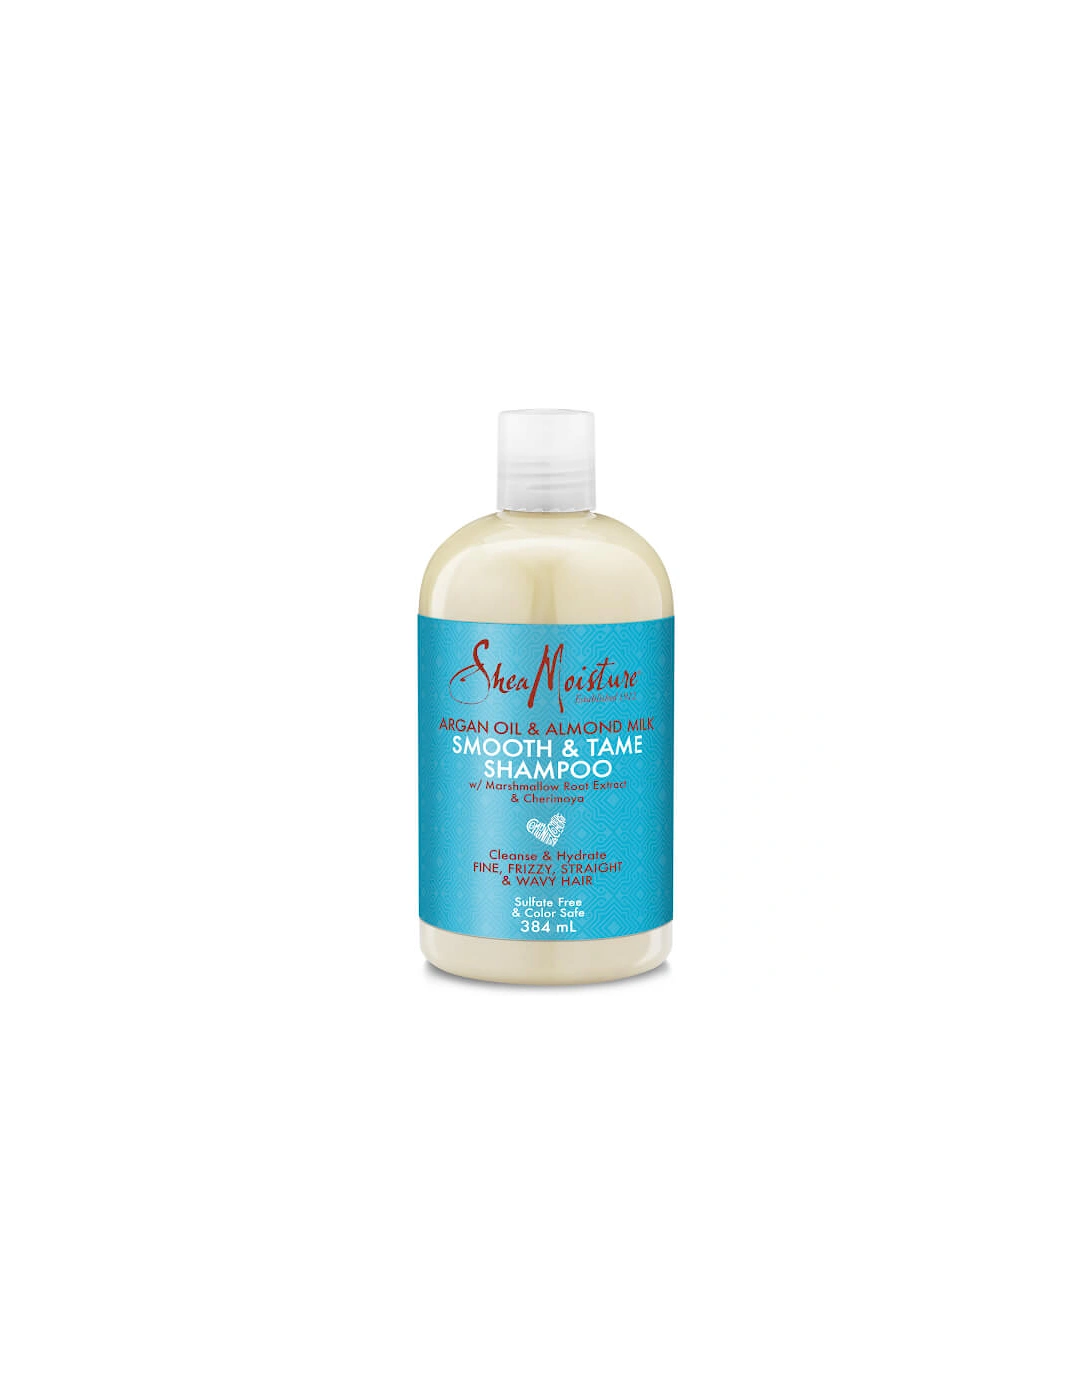 Argan Oil and Almond Milk Shampoo 384ml - SheaMoisture, 2 of 1